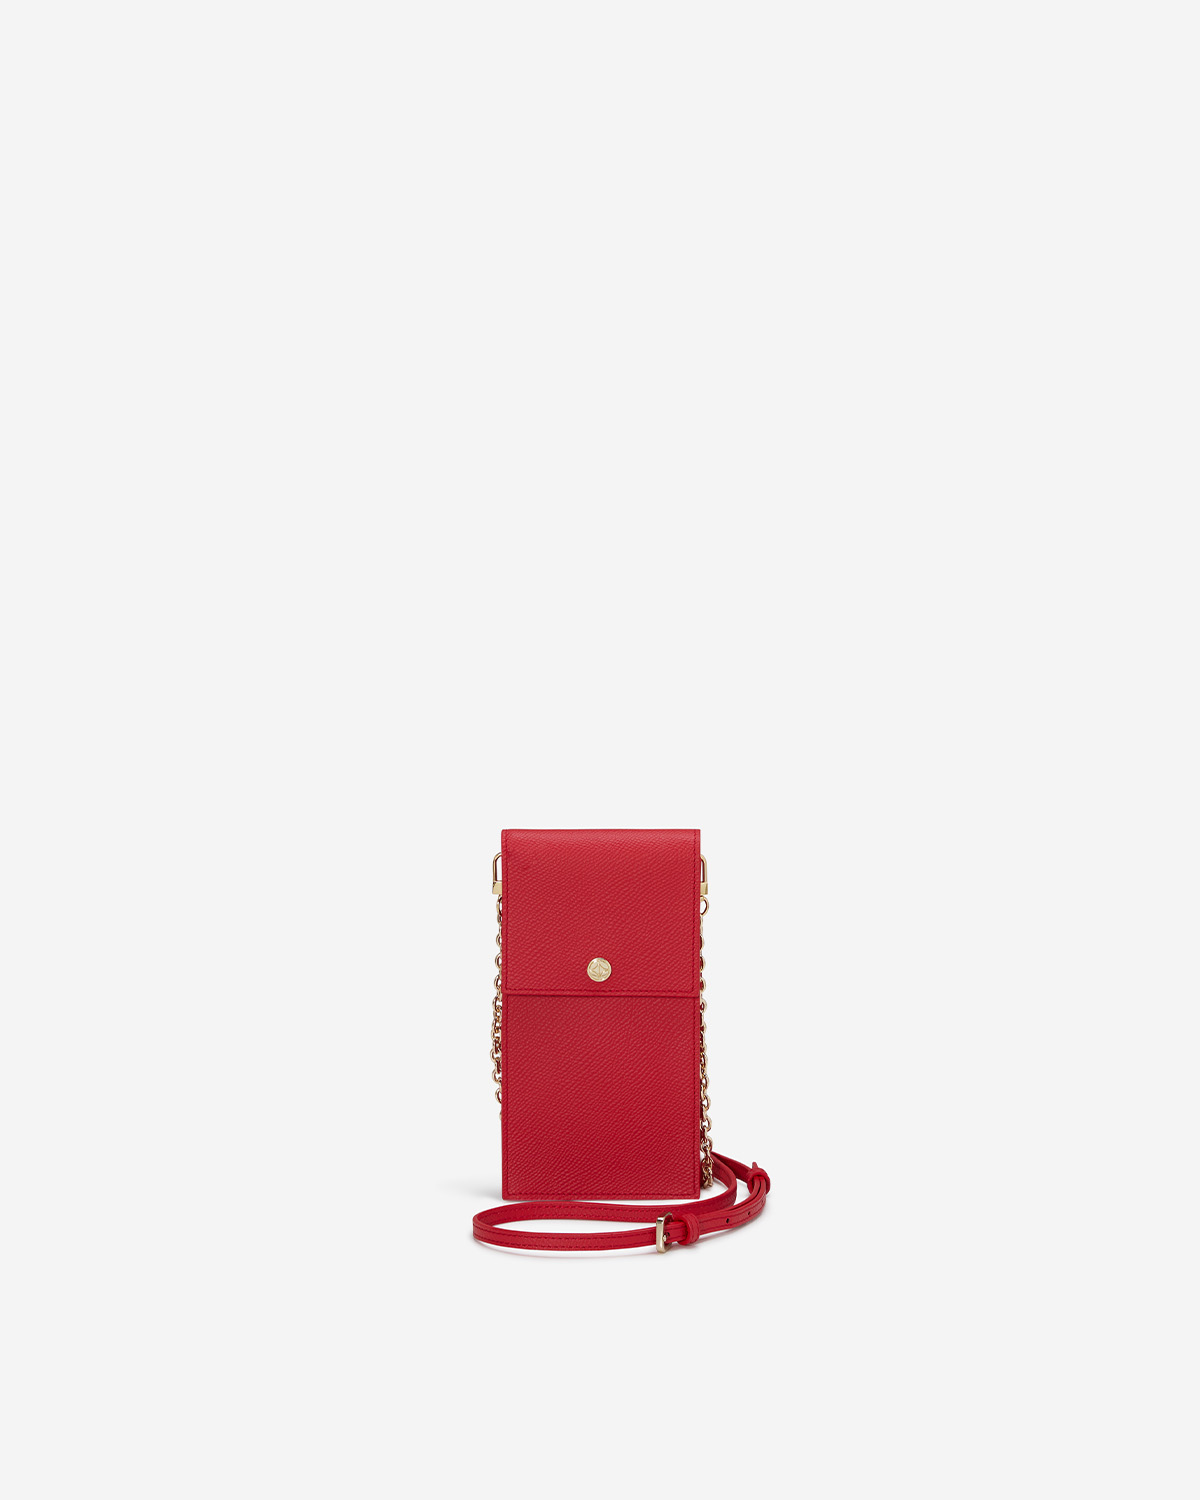 VERA Emily Phone Pouch with Leather Gold Chain in Passionate Red กระเป๋าใส่โทรศัพท์หนังแท้ พร้อมฟังก์ชั่นกระเป๋าสตางค์ มาพร้อมสายสะพายโซ่หนังถอดได้ สีแดง